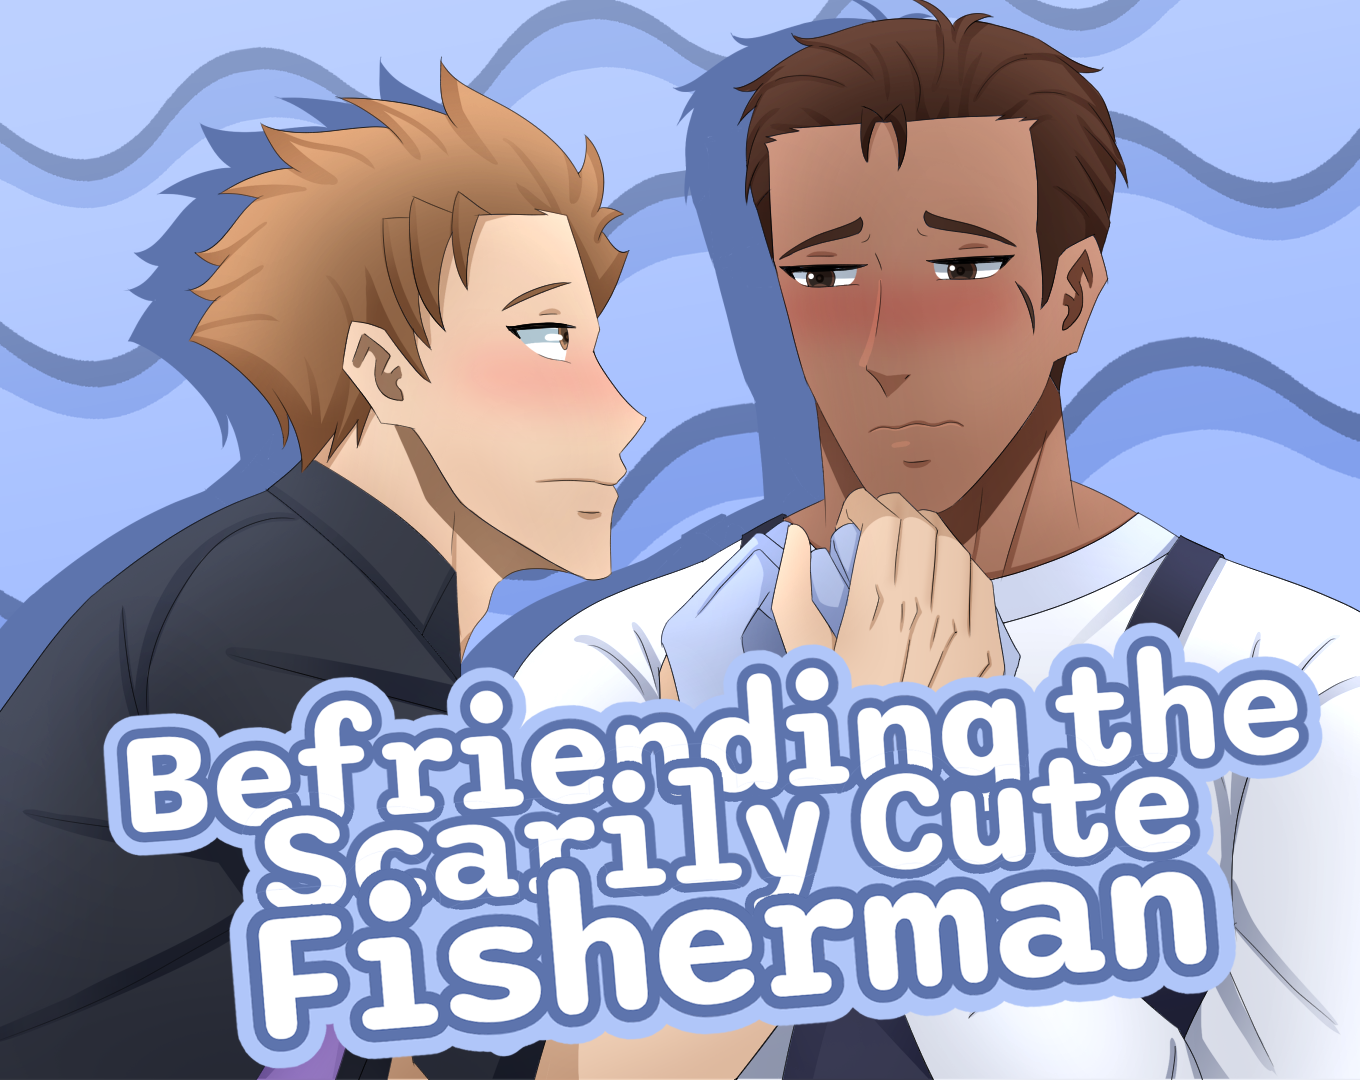 Befriending the Scarily Cute Fisherman - BL